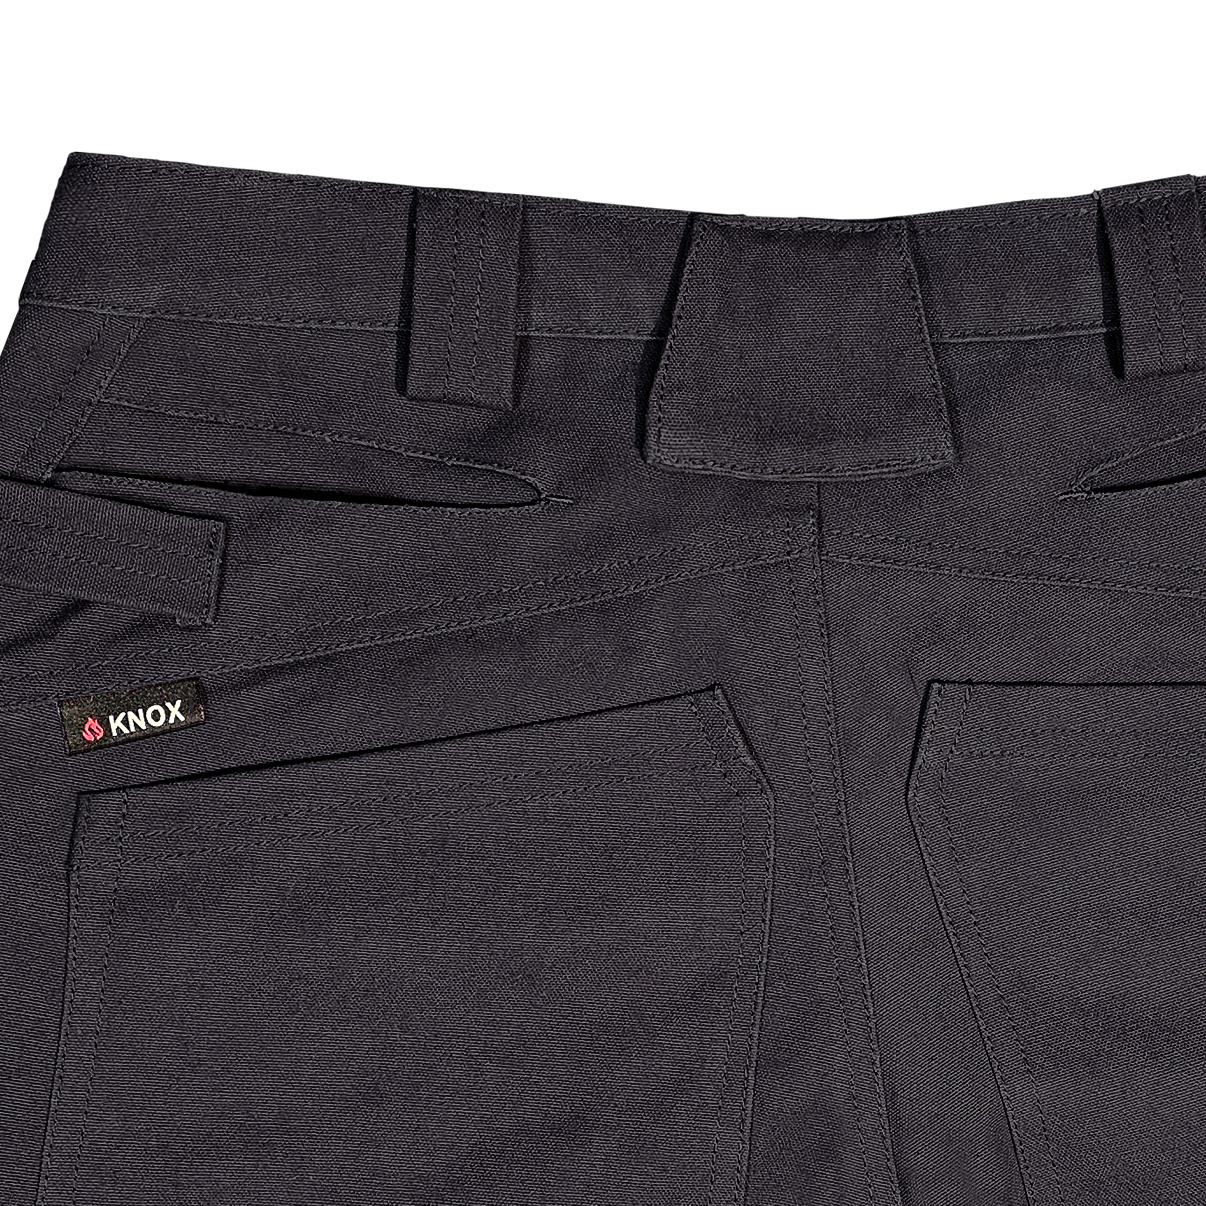 Knox Renegade Utility FR Premium Pants - Black